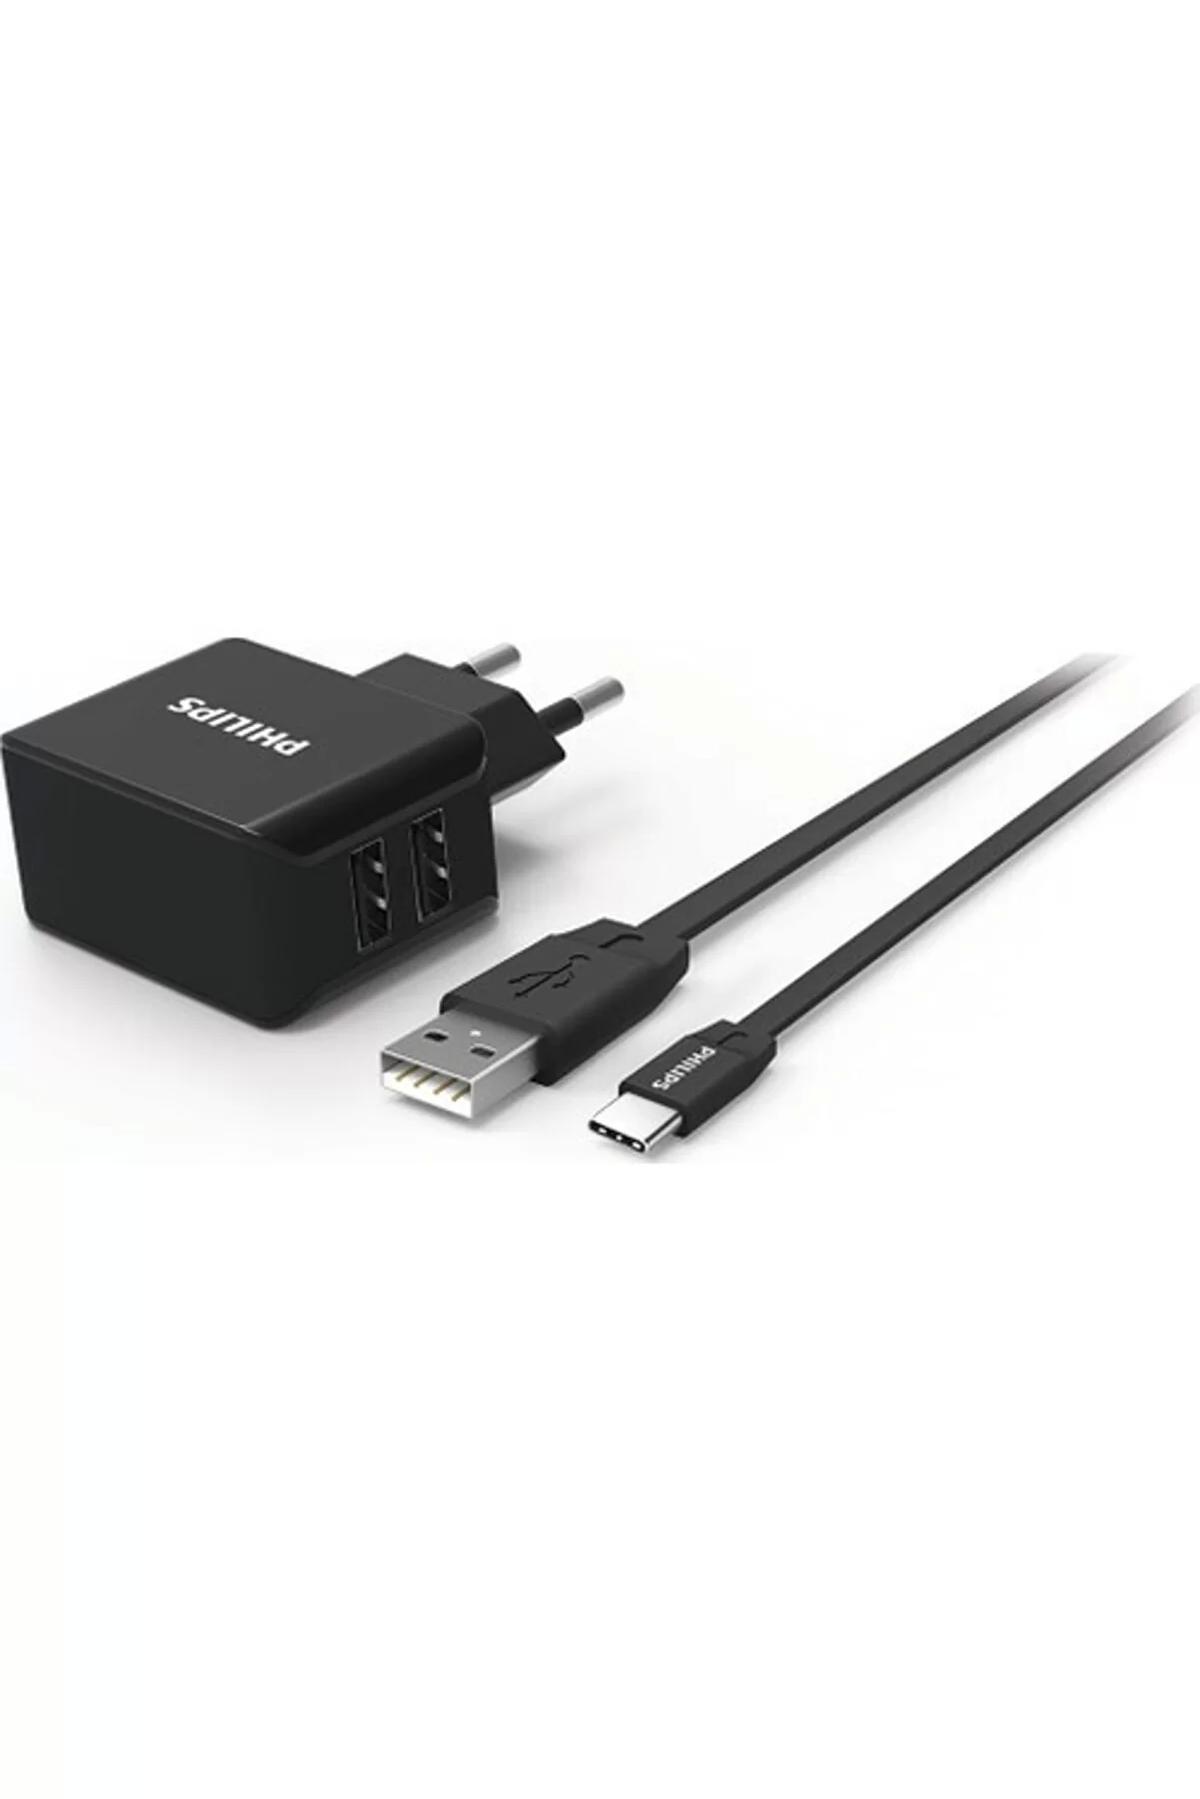 Philips Dlp2502c Universal USB Kablolu Hızlı Şarj Aleti Siyah